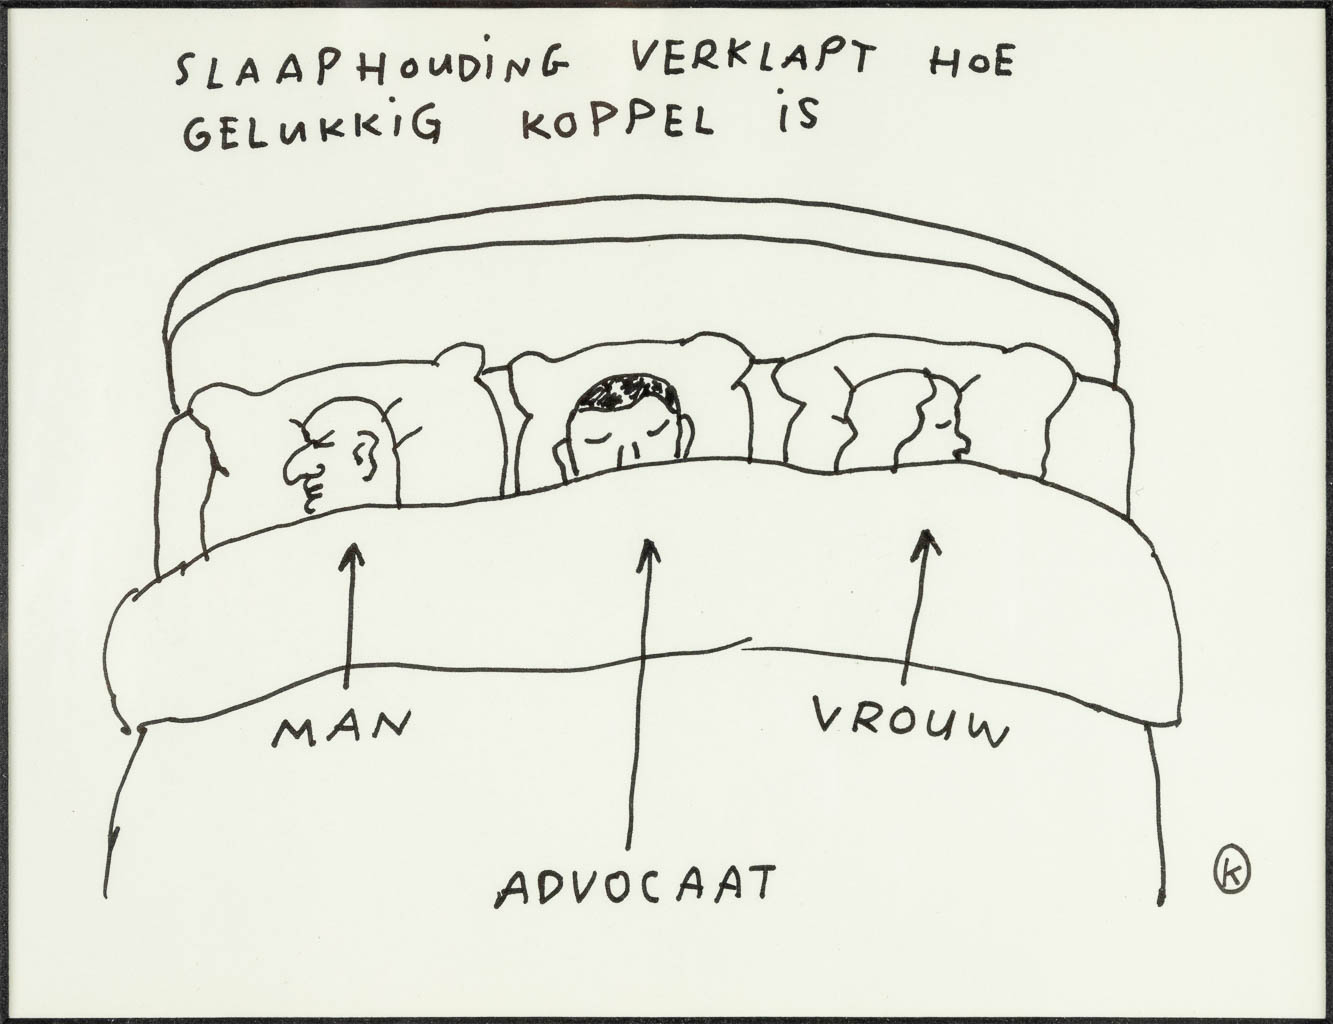 KAMAGURKA (1956) 'Slaaphouding verklapt hoe gelukkig koppel is', a drawing, pen on paper. (21 x 16 cm)